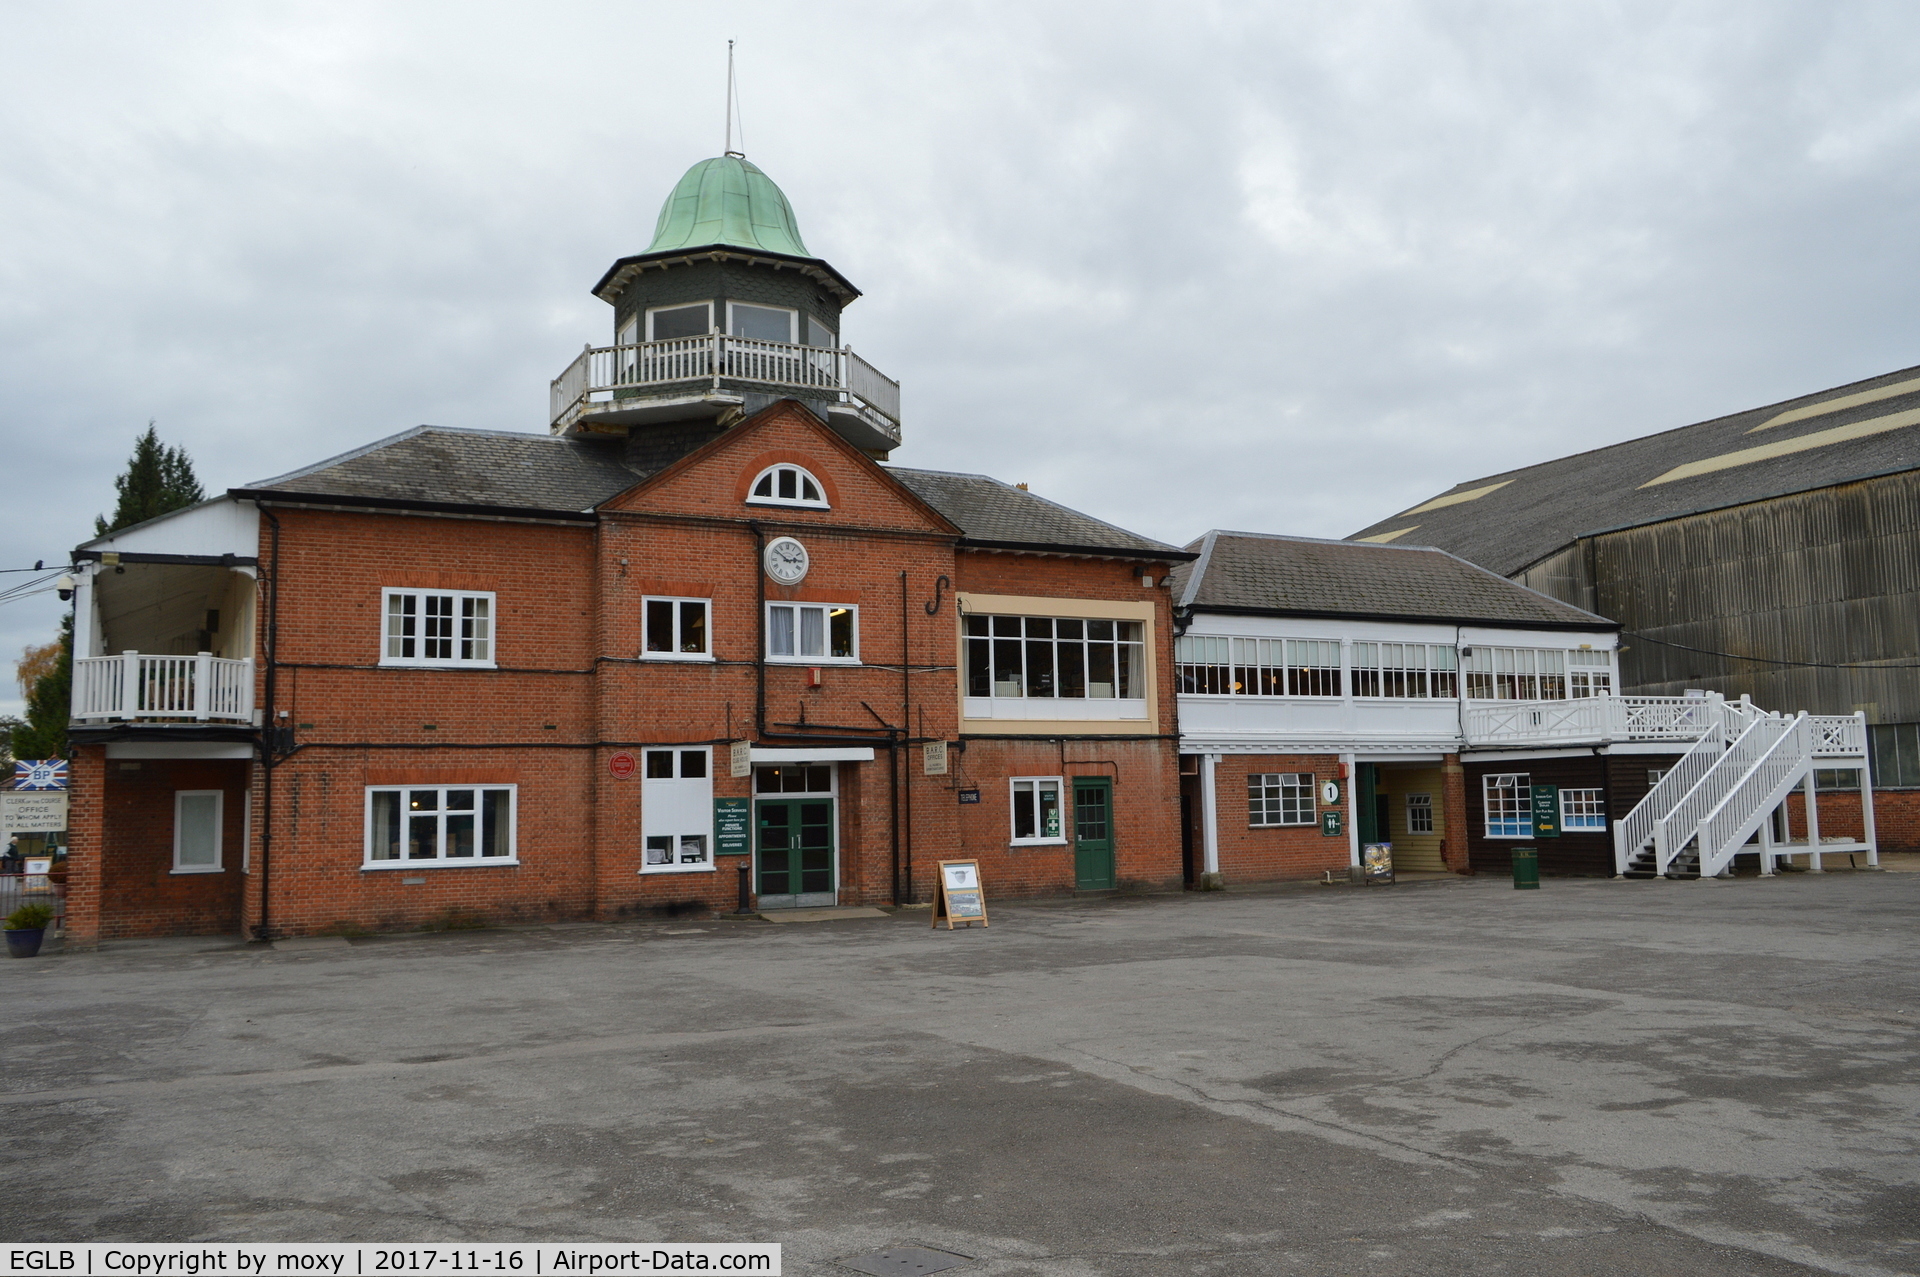 EGLB Airport - Club House at Brooklands Aerodrome, Weybridge, England.